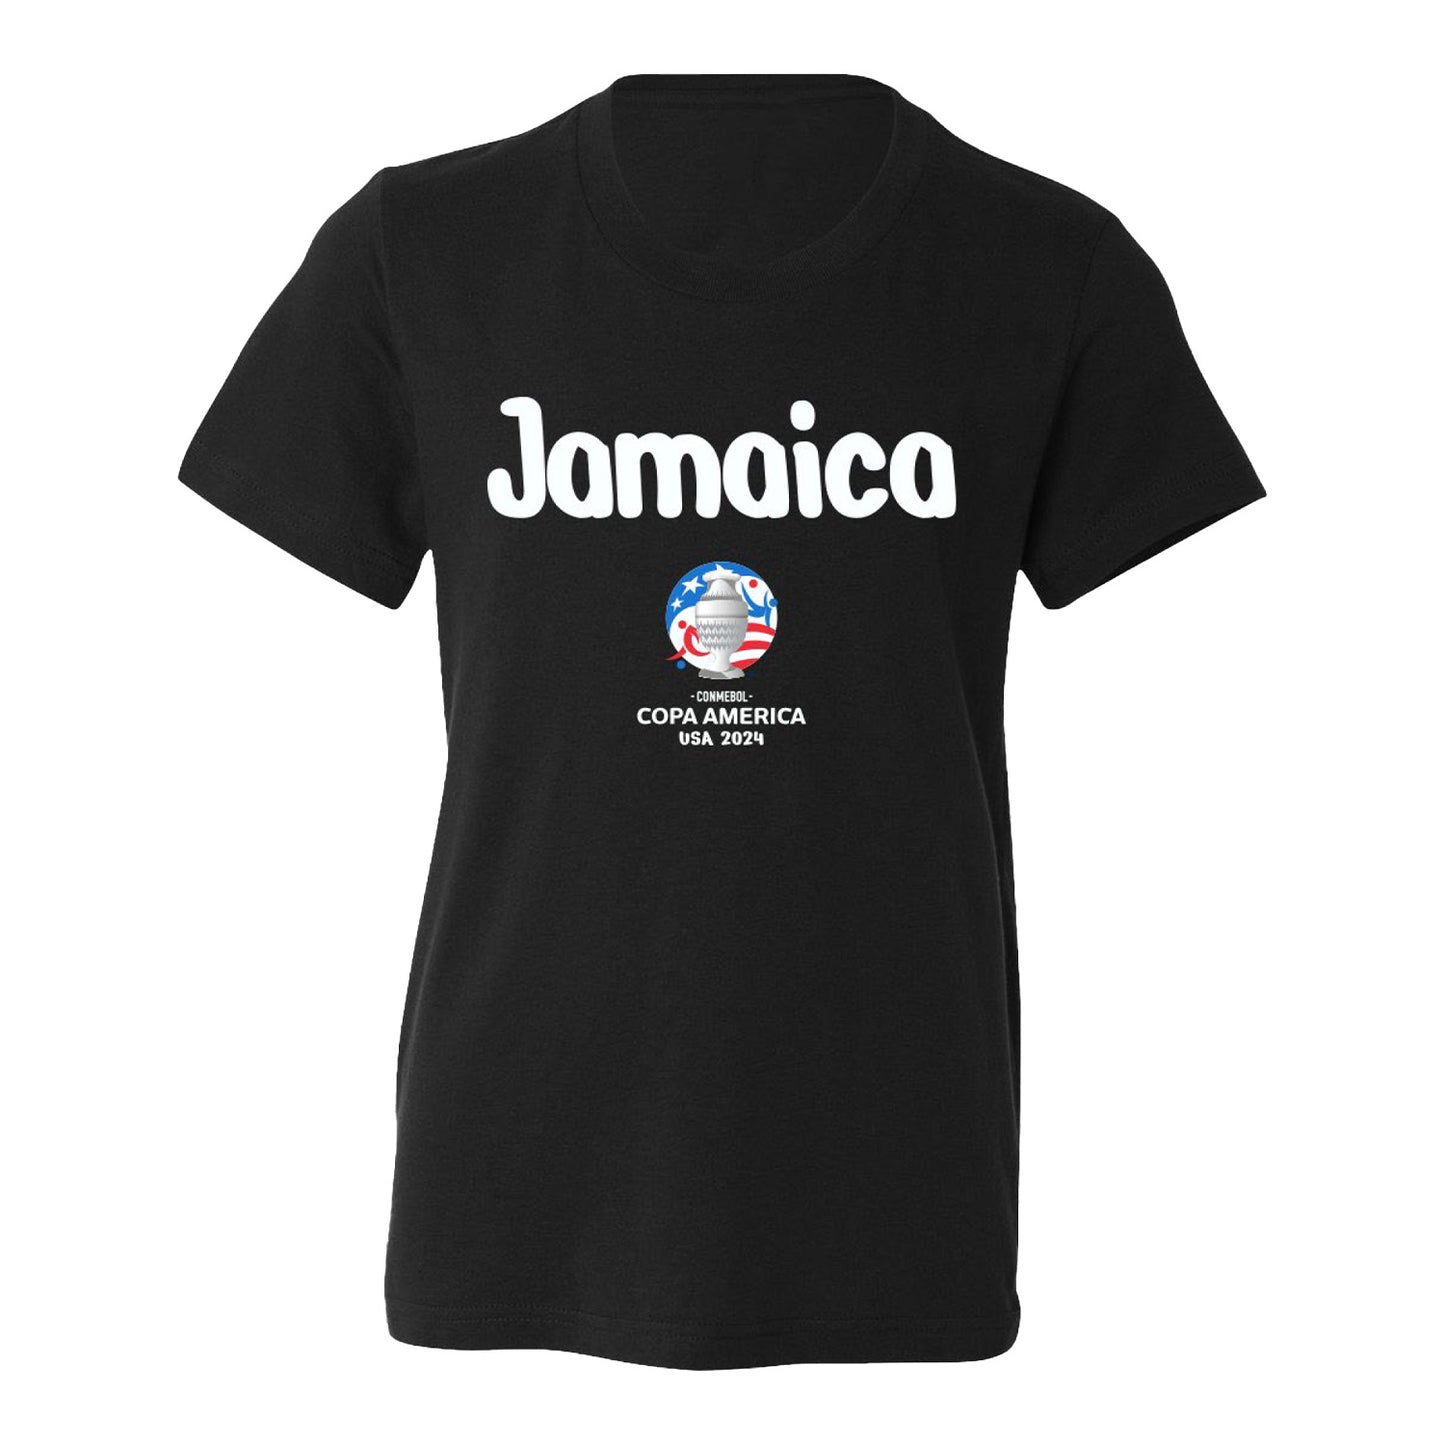 Youth Copa America Jamaica Black T-Shirt